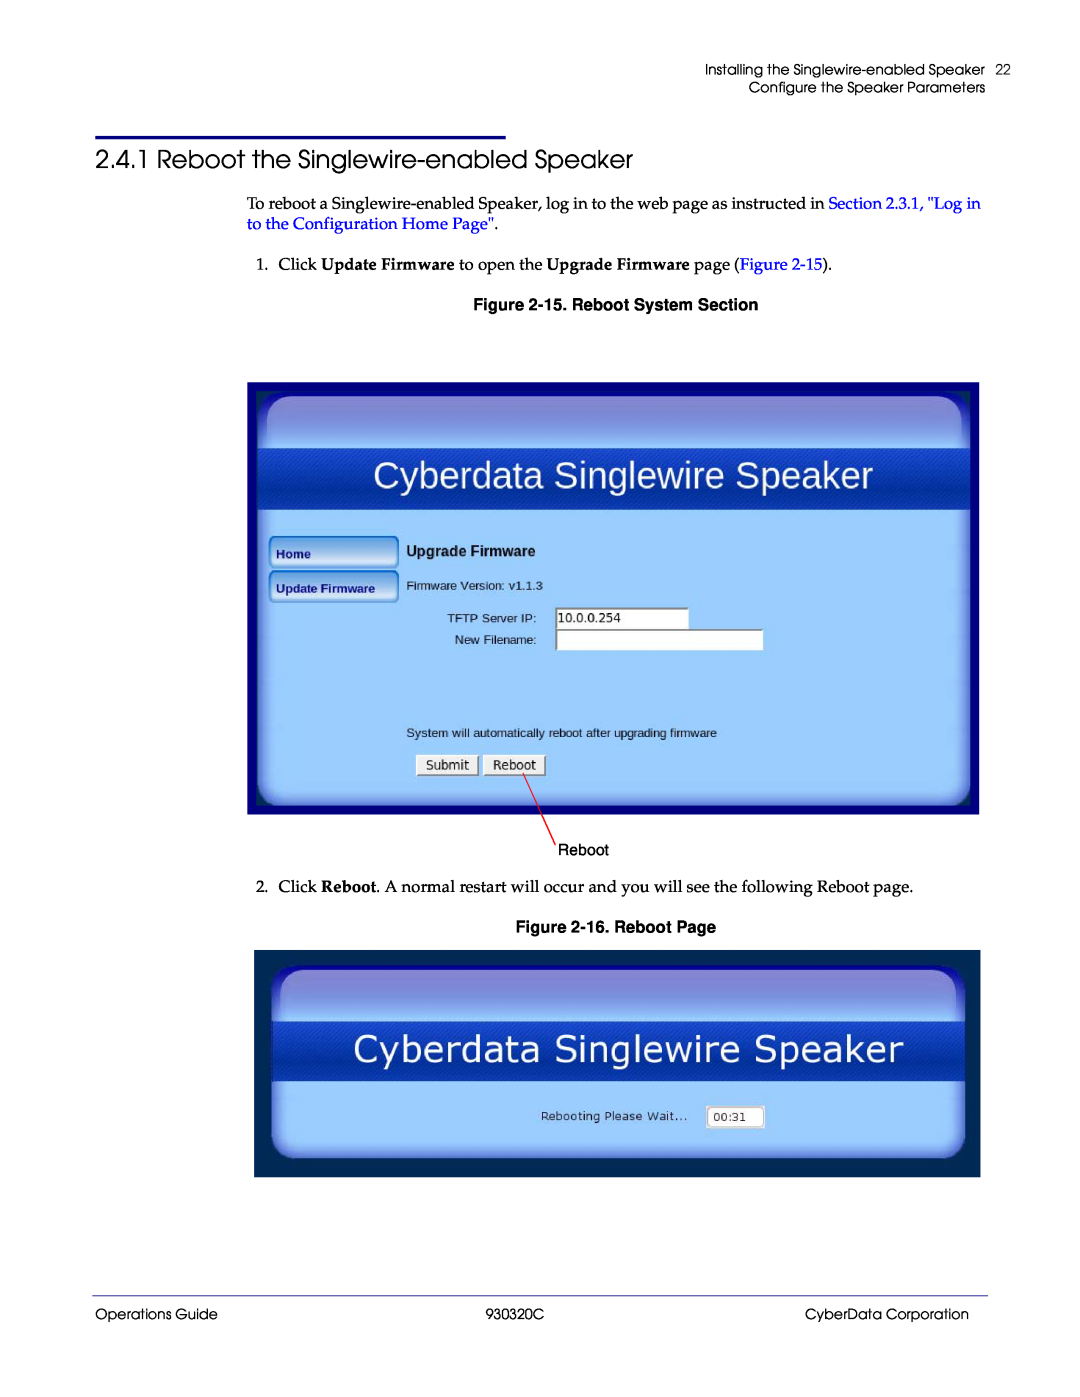 CyberData 11103 manual Reboot the Singlewire-enabledSpeaker, 15.Reboot System Section, 16.Reboot Page 